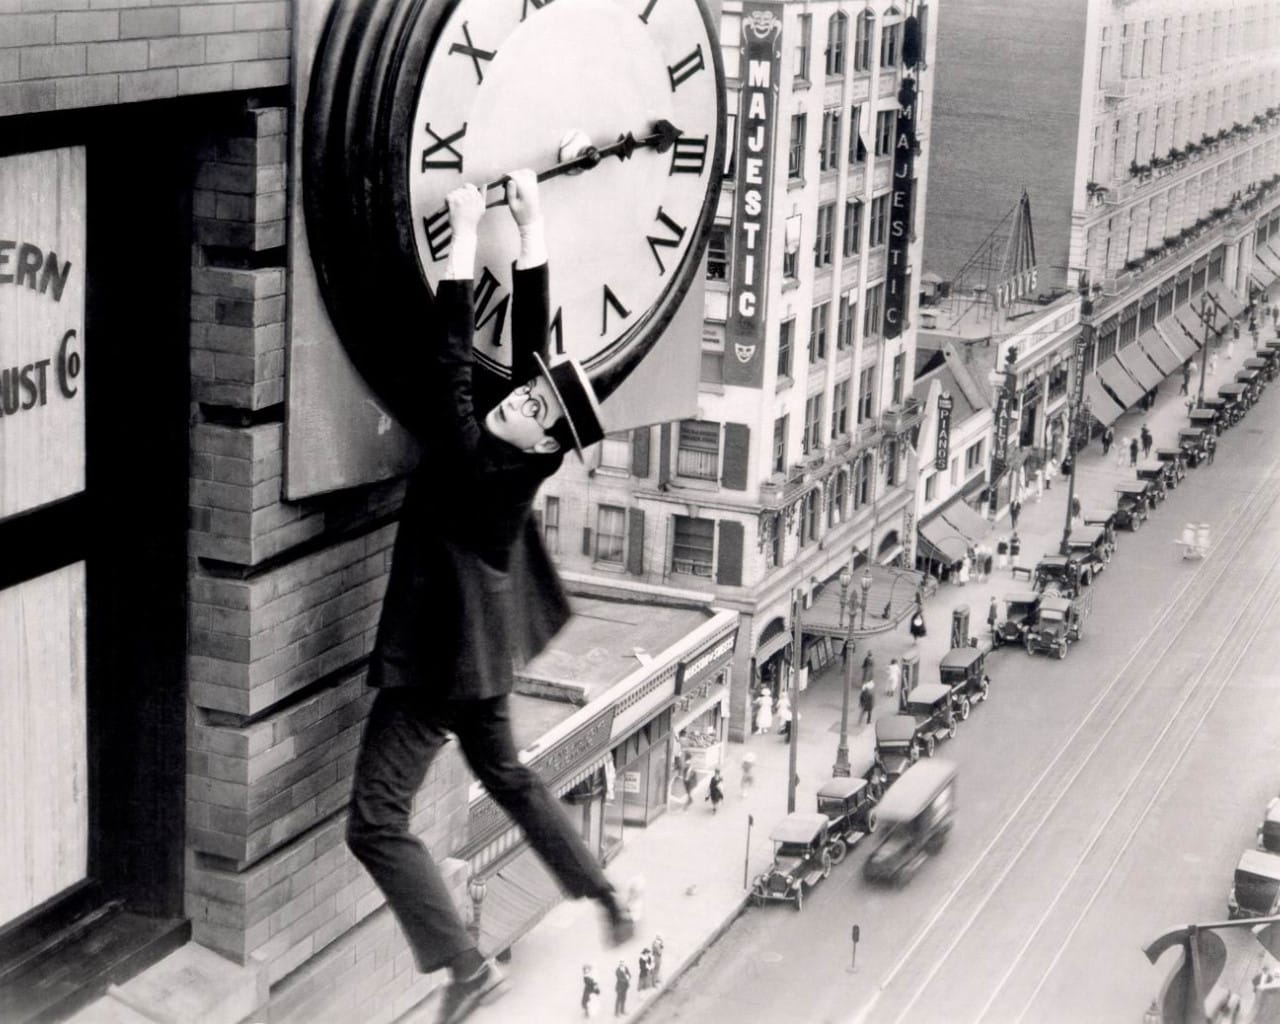 Harold hangs from the clock